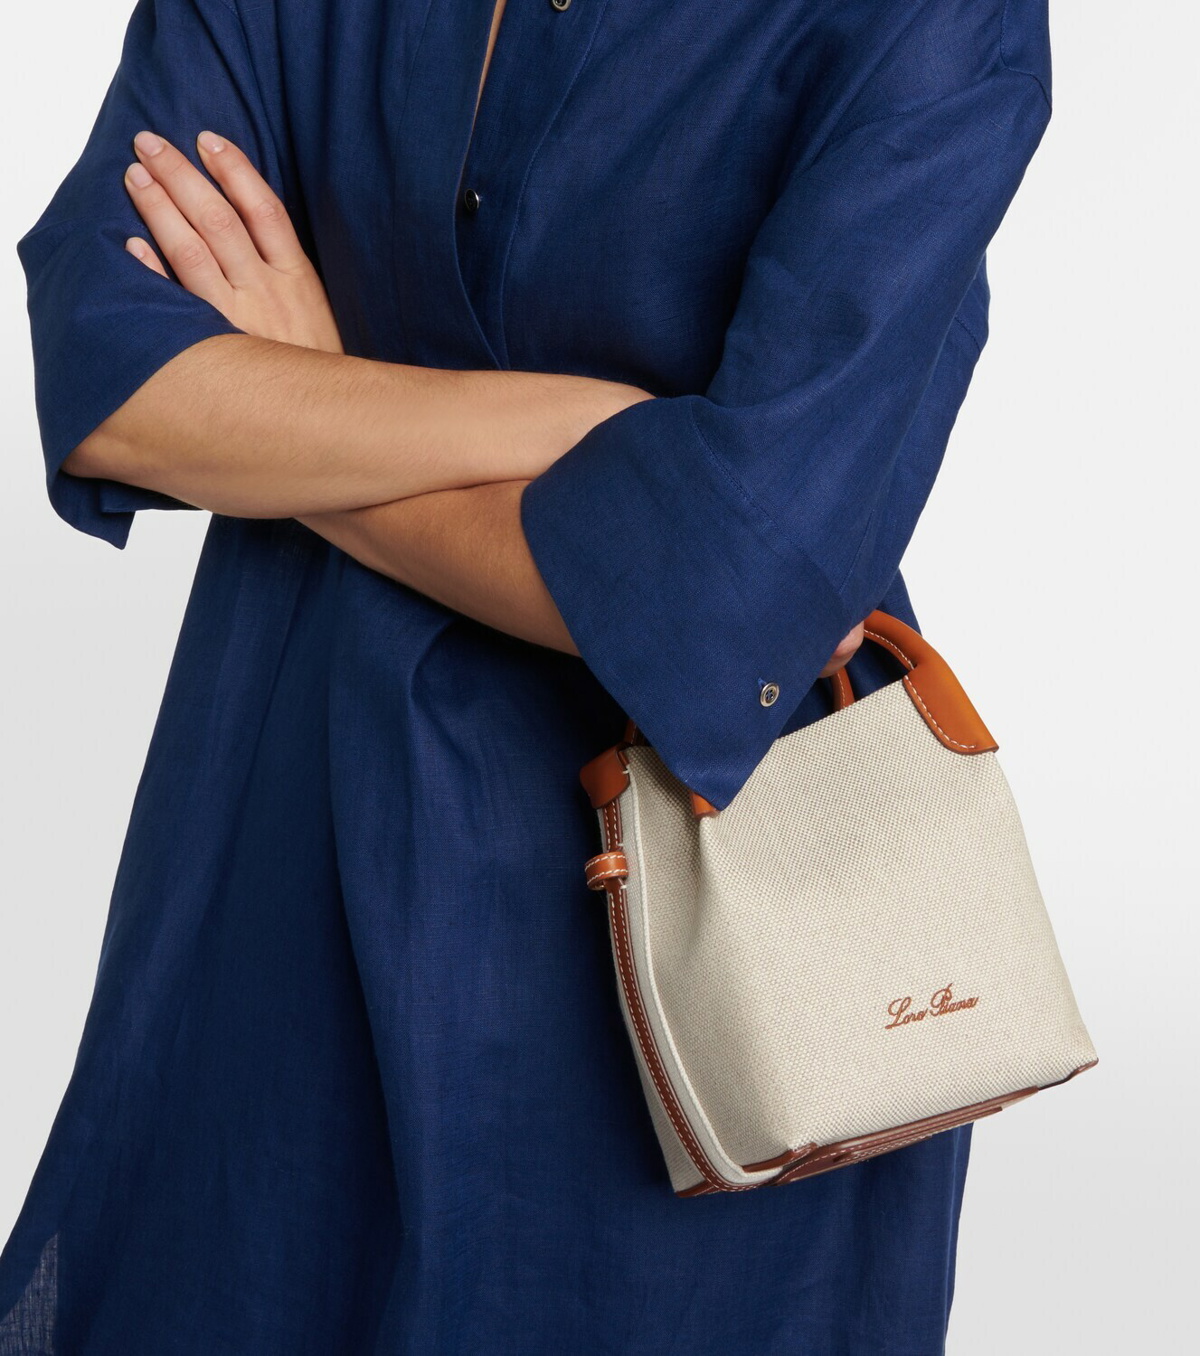 Loro Piana - Handbag Large Bale Bag, White, Calfskin, One-Size